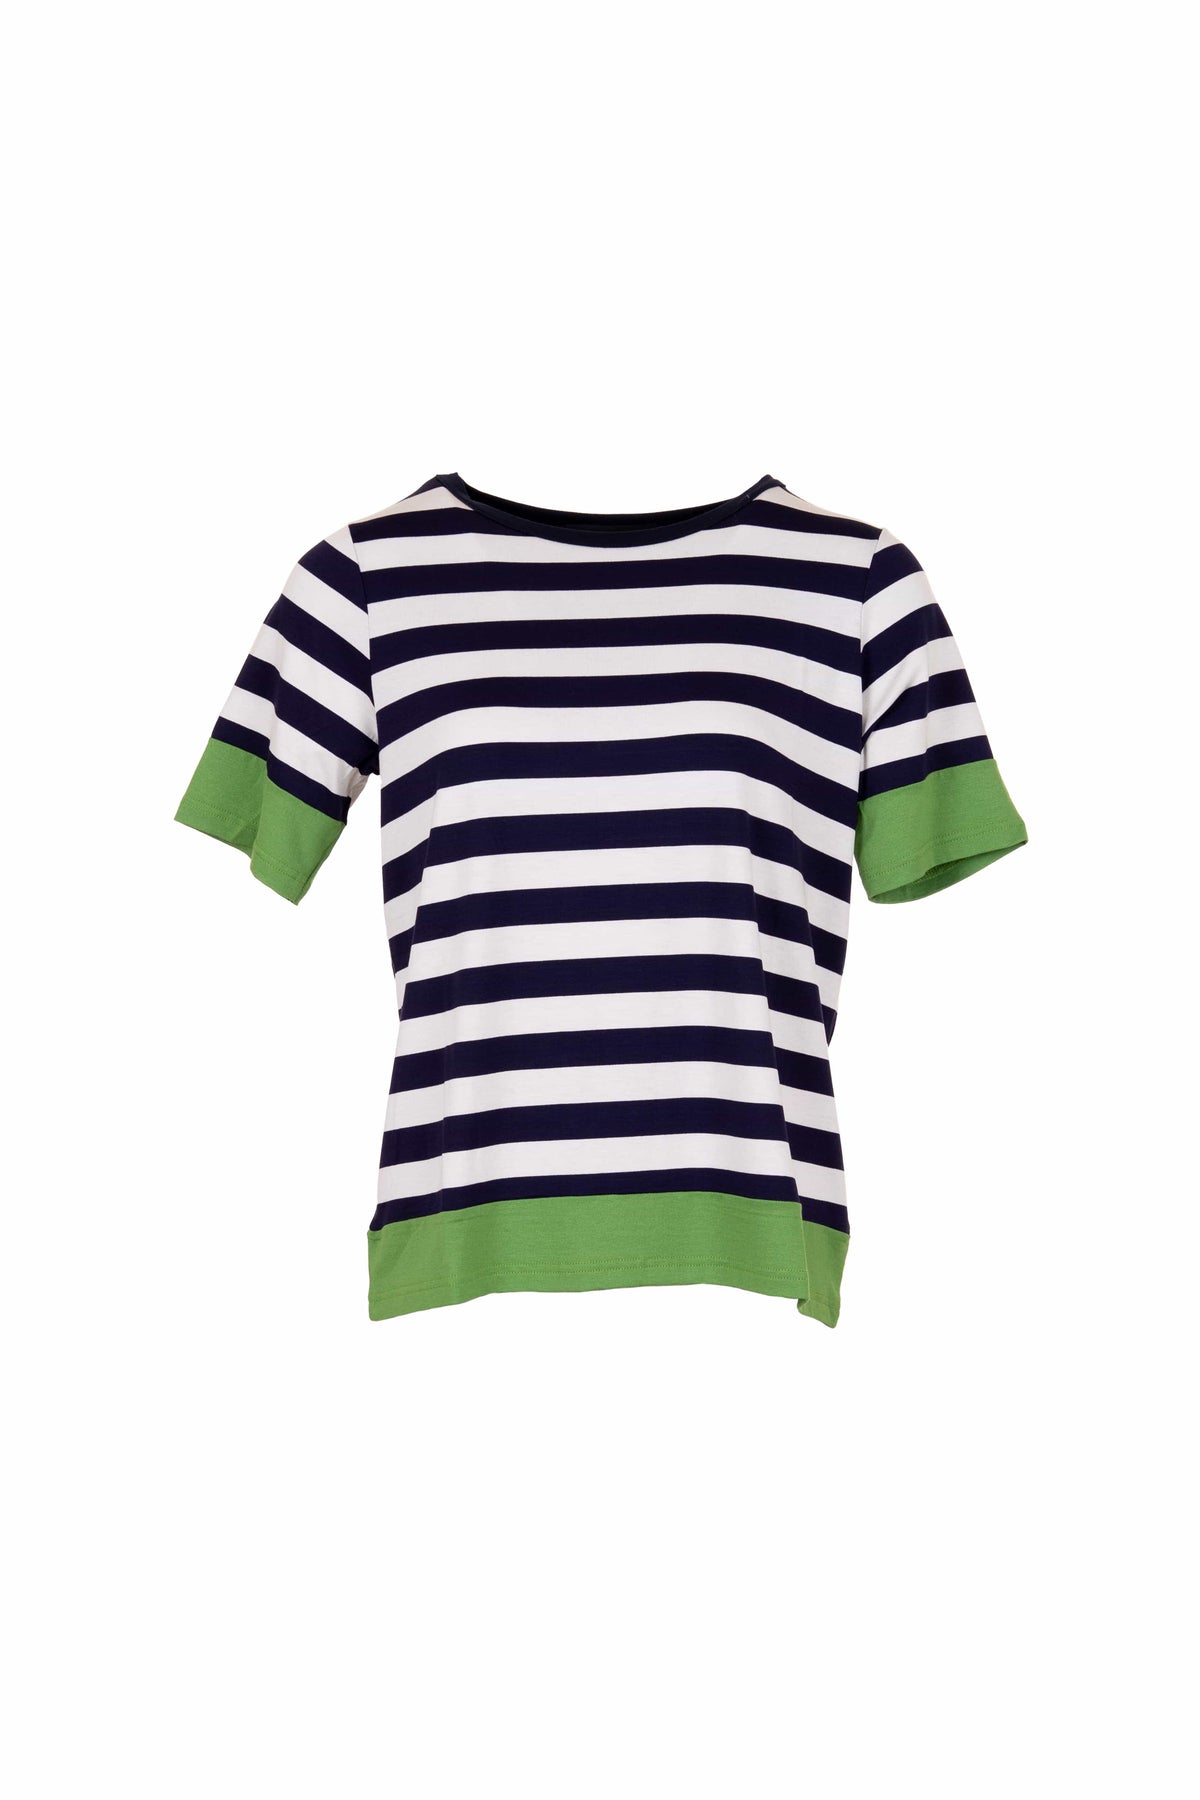 Peruzzi Stripe T-Shirt With Colour Pop